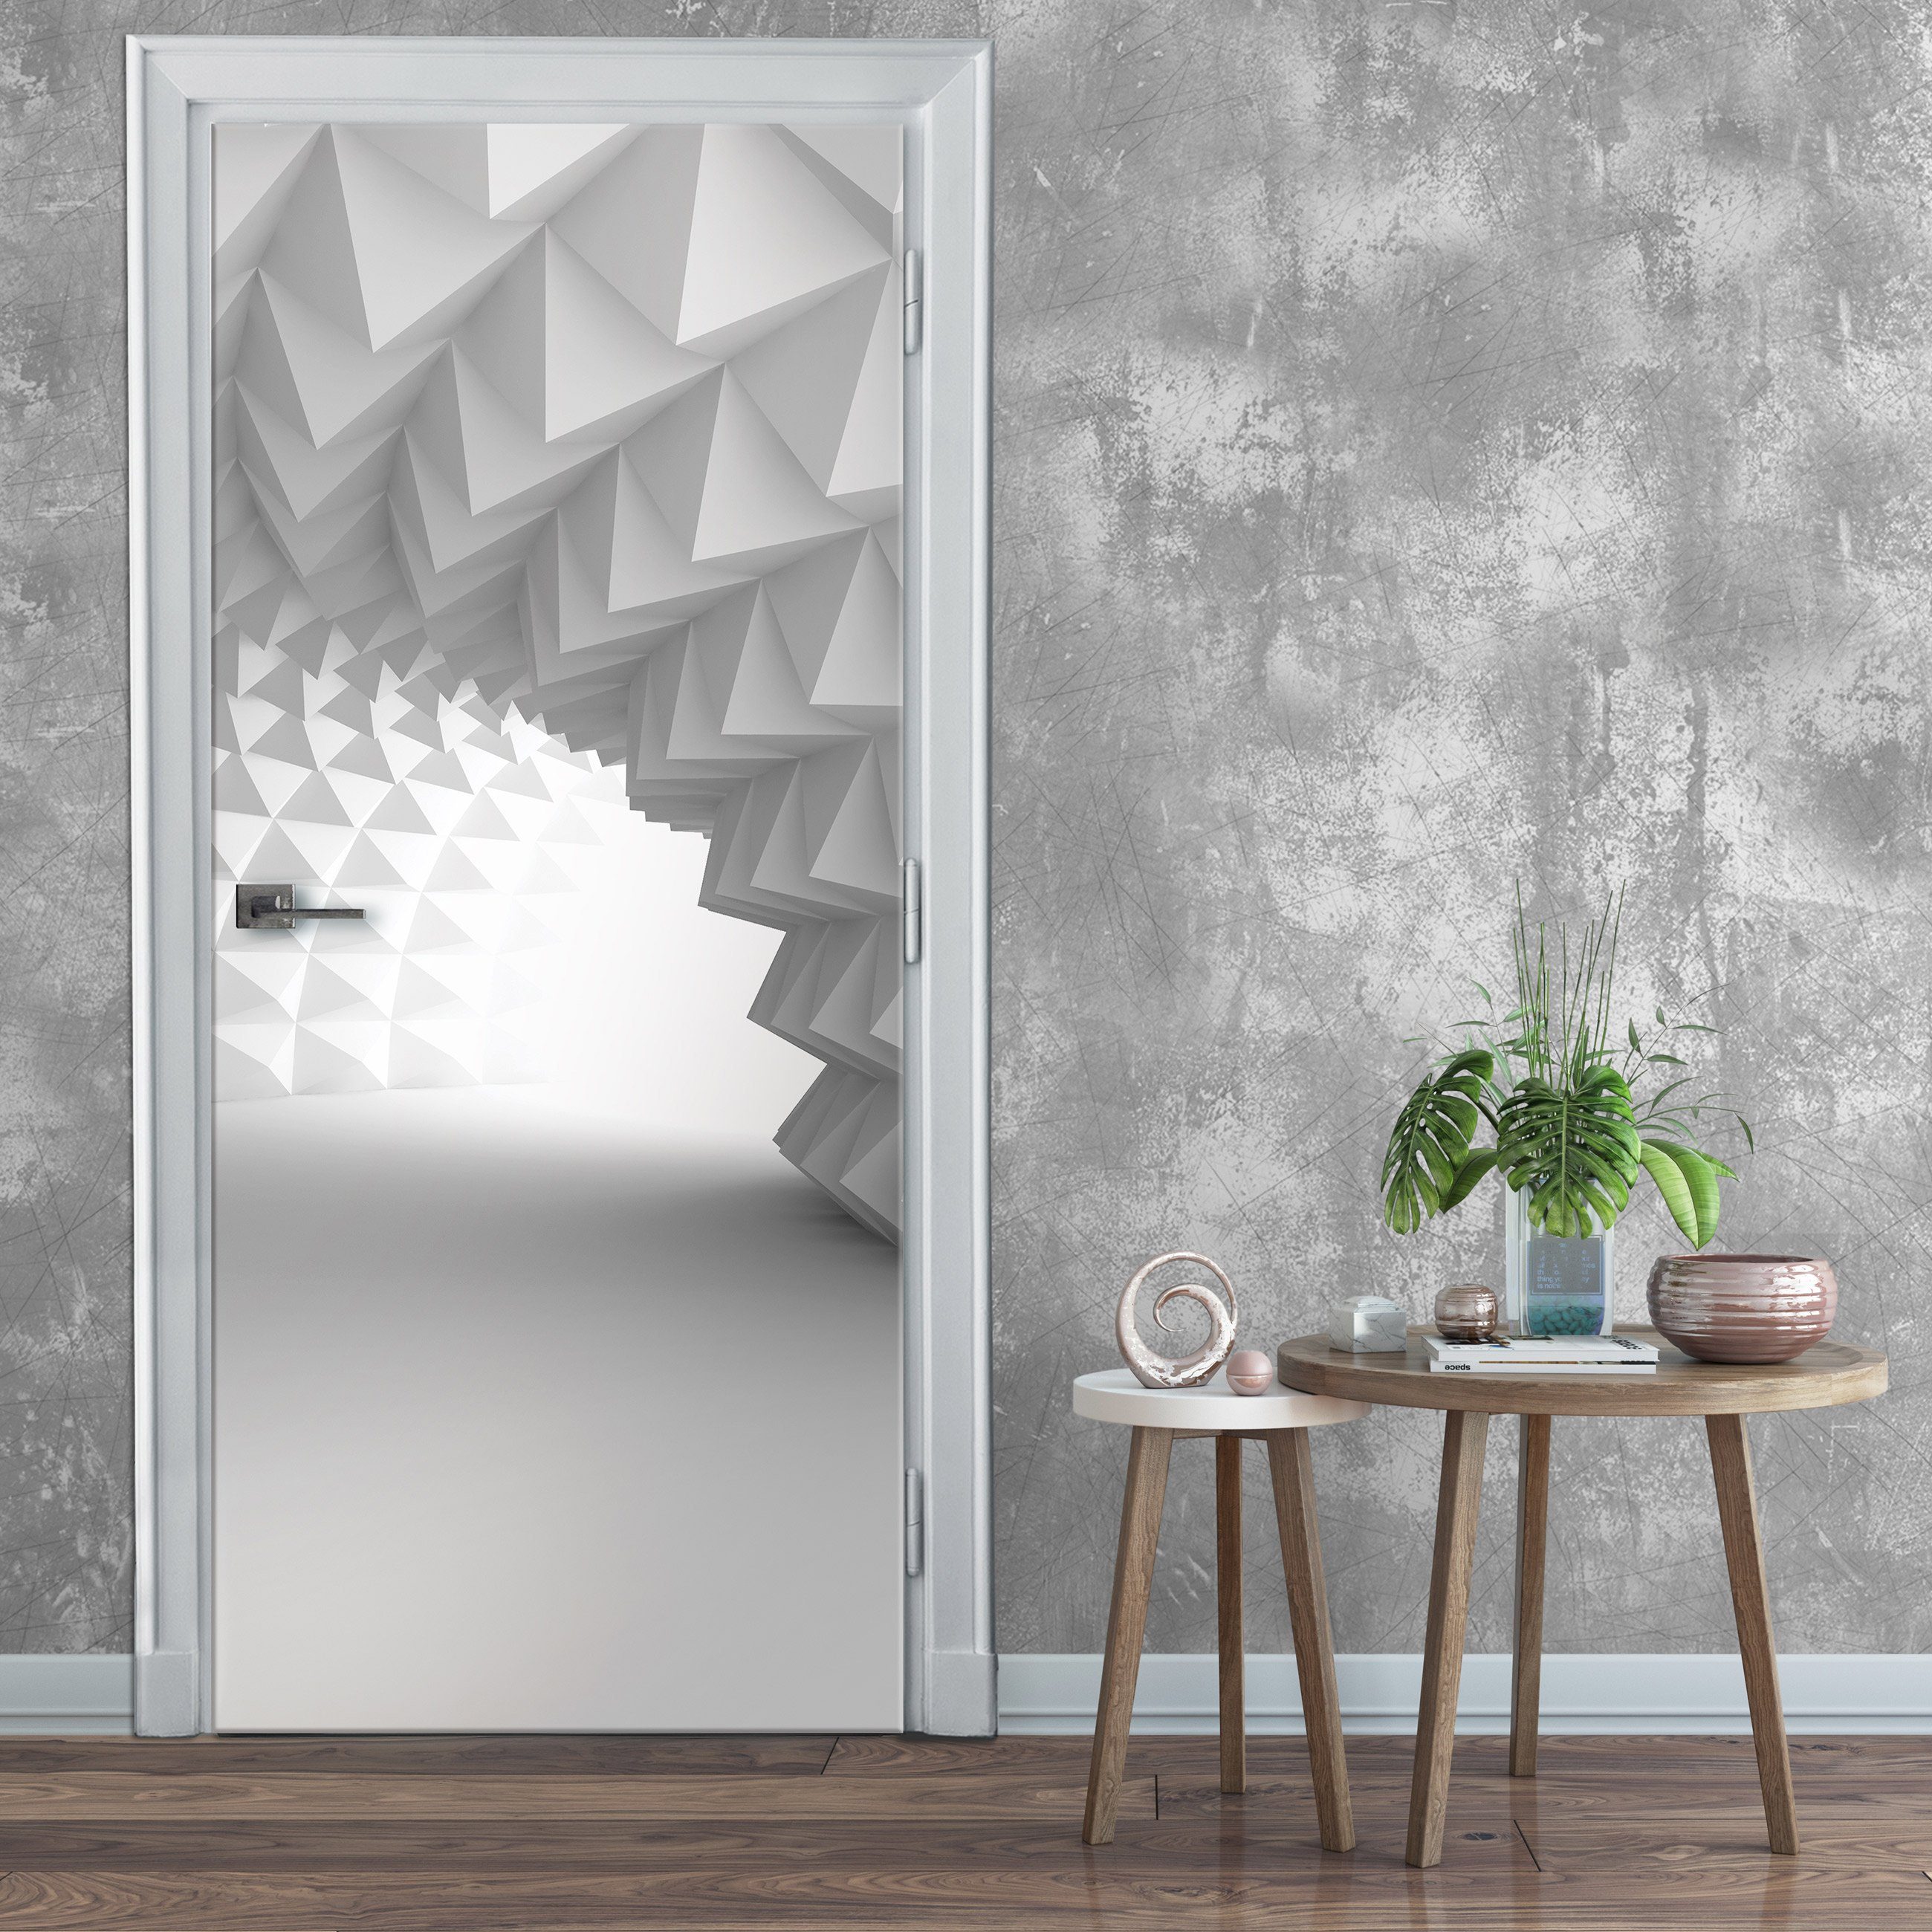 Wallarena Türtapete »Selbstklebend Tunnel 3D Effekt Türposter Türfolie  Türaufkleber Fototapete für Tür, 91x211 cm«, Glatt, 3D-Optik, Türtapete  Selbstklebend